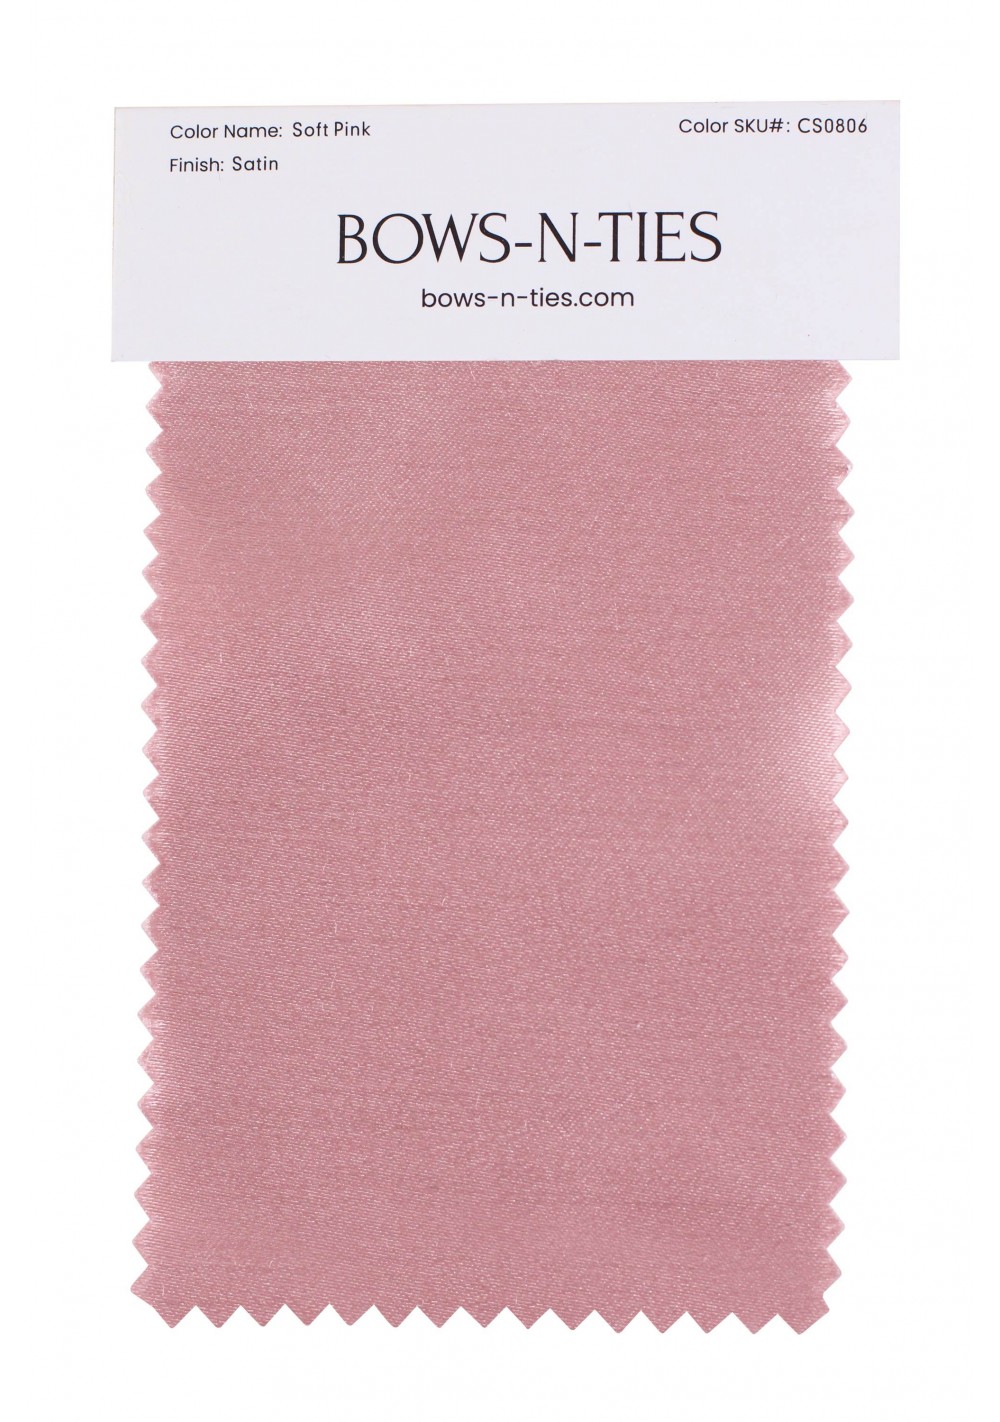 Satin Fabric Swatch - Soft Pink